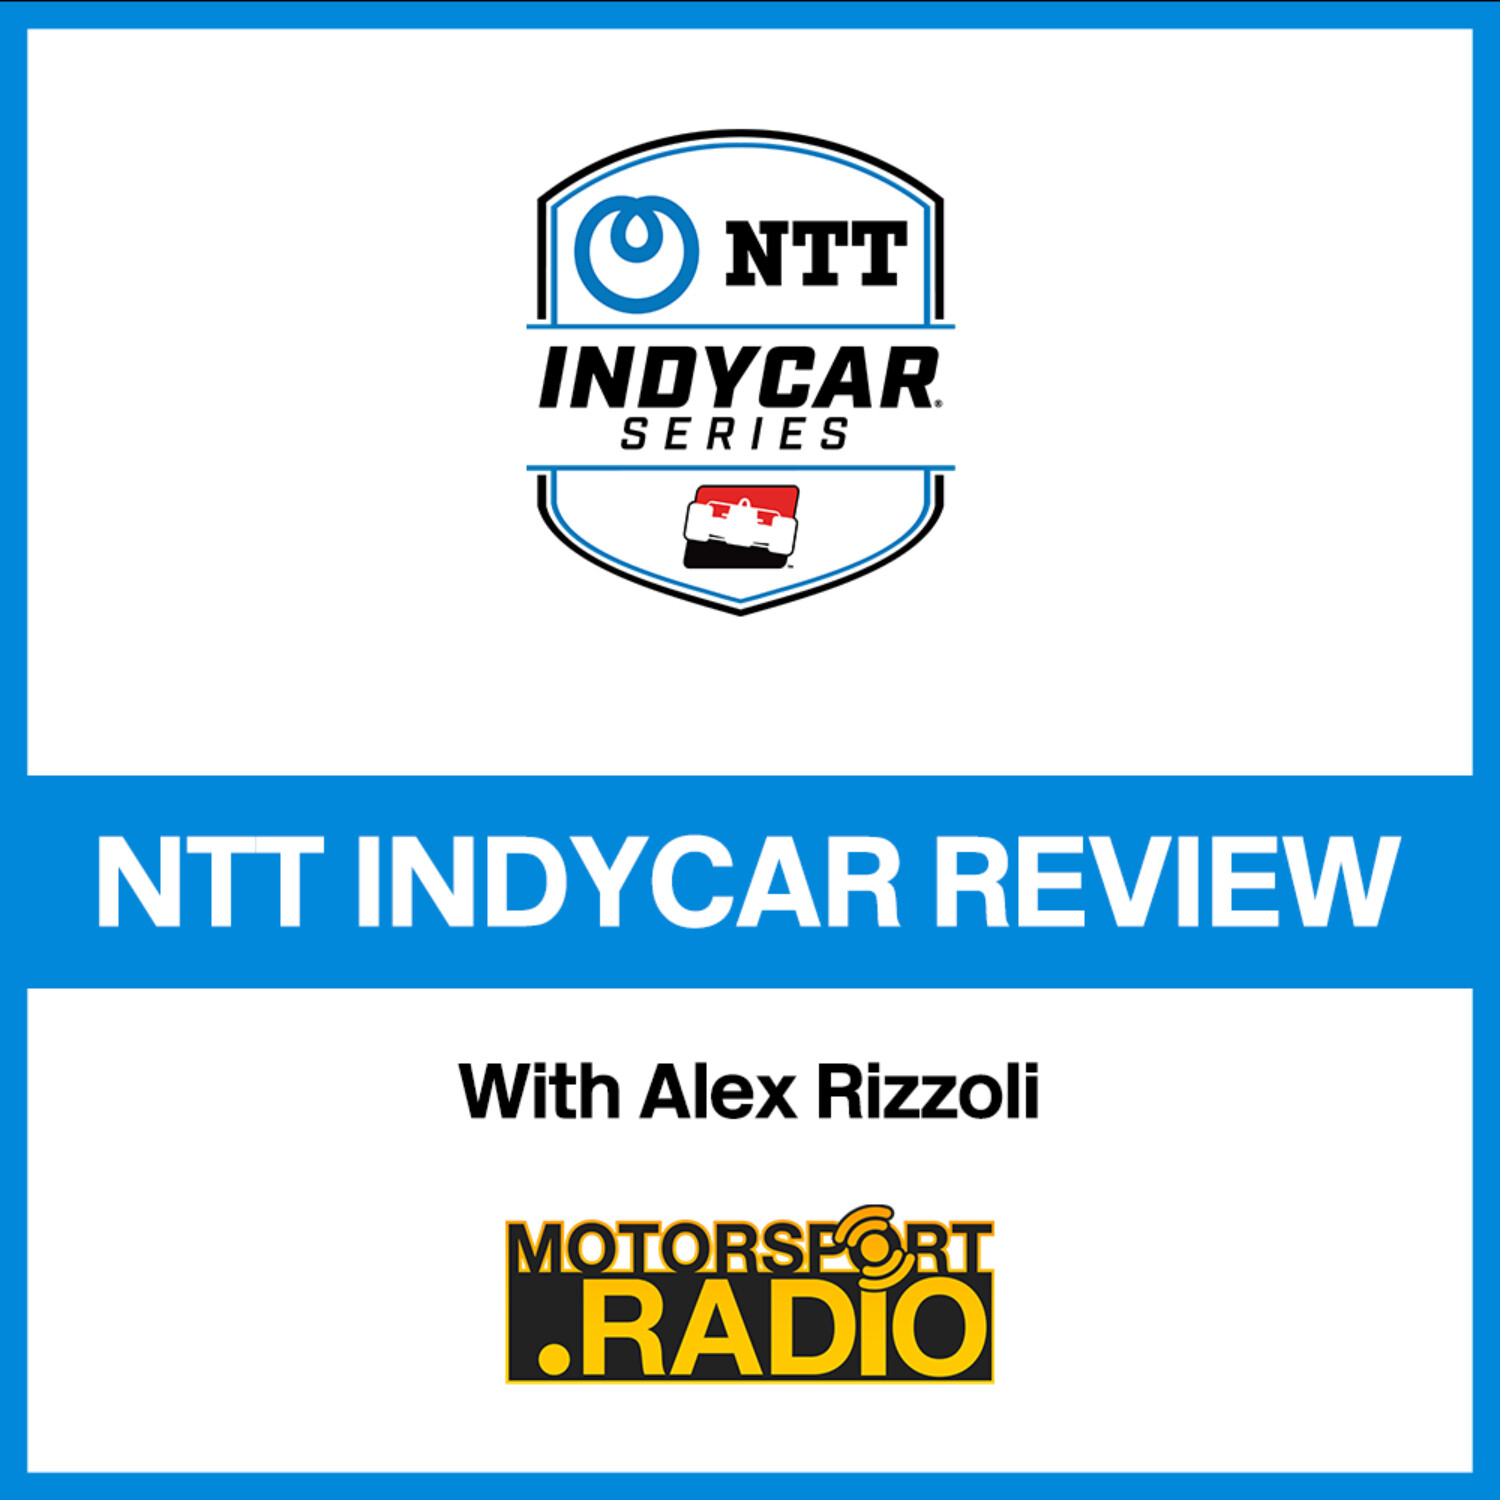 NTT INDYCAR Round 3 Review with Alex Rizzoli